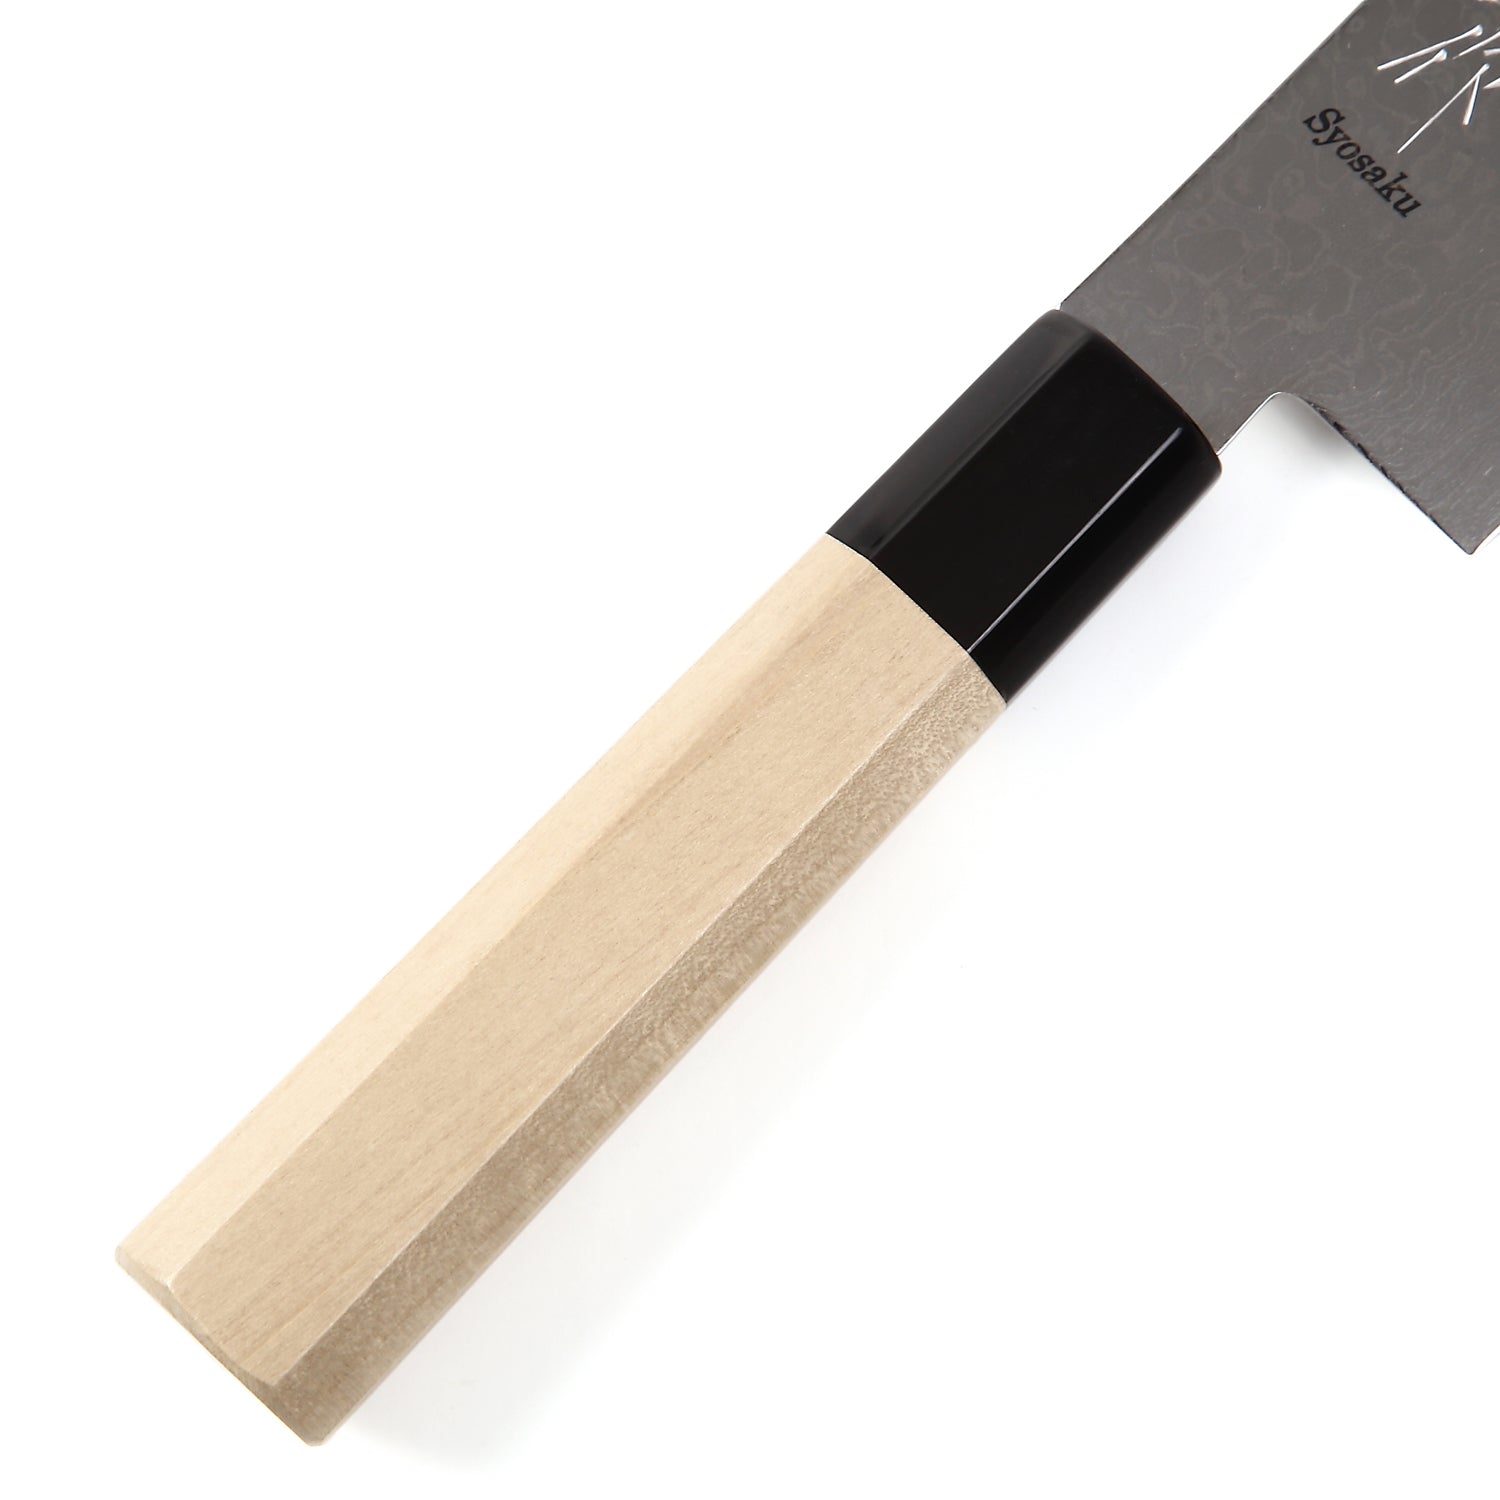 Japanese Santoku/Multi-purpose Knife with Walnut Handle - KoboSeattle